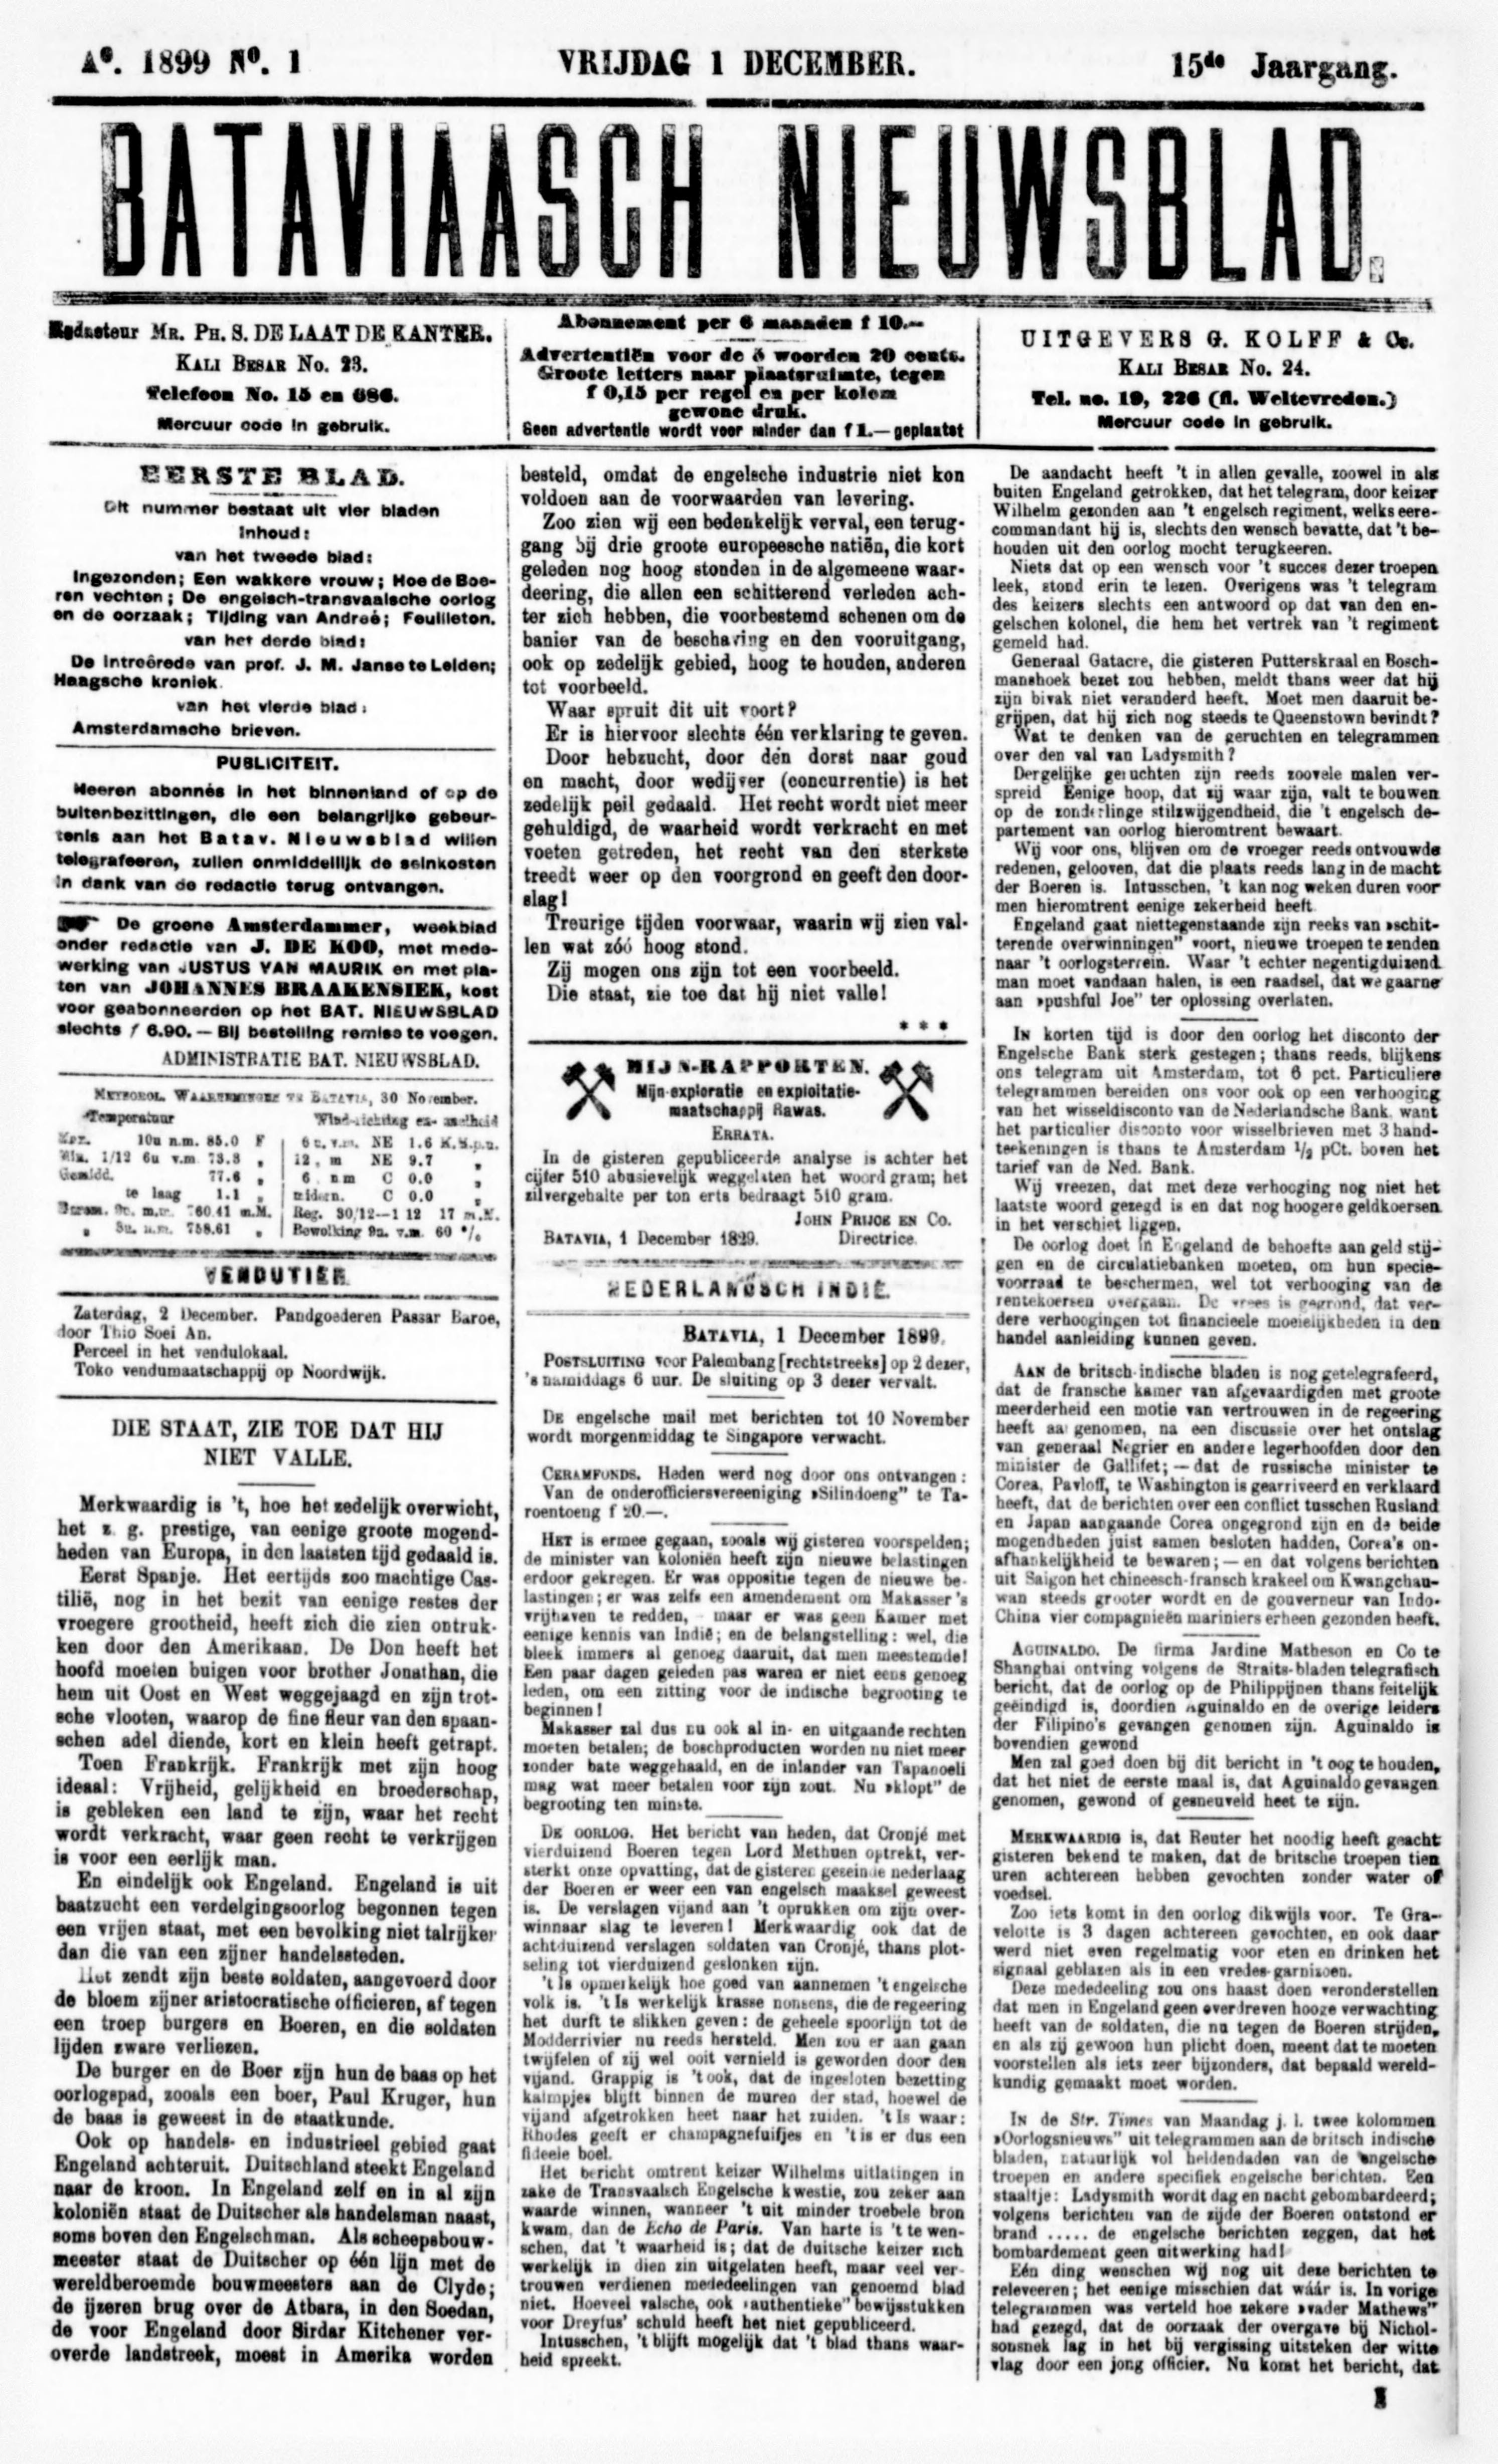 Bataviaasch nieuwsblad 01 Dec 1899 Page 1